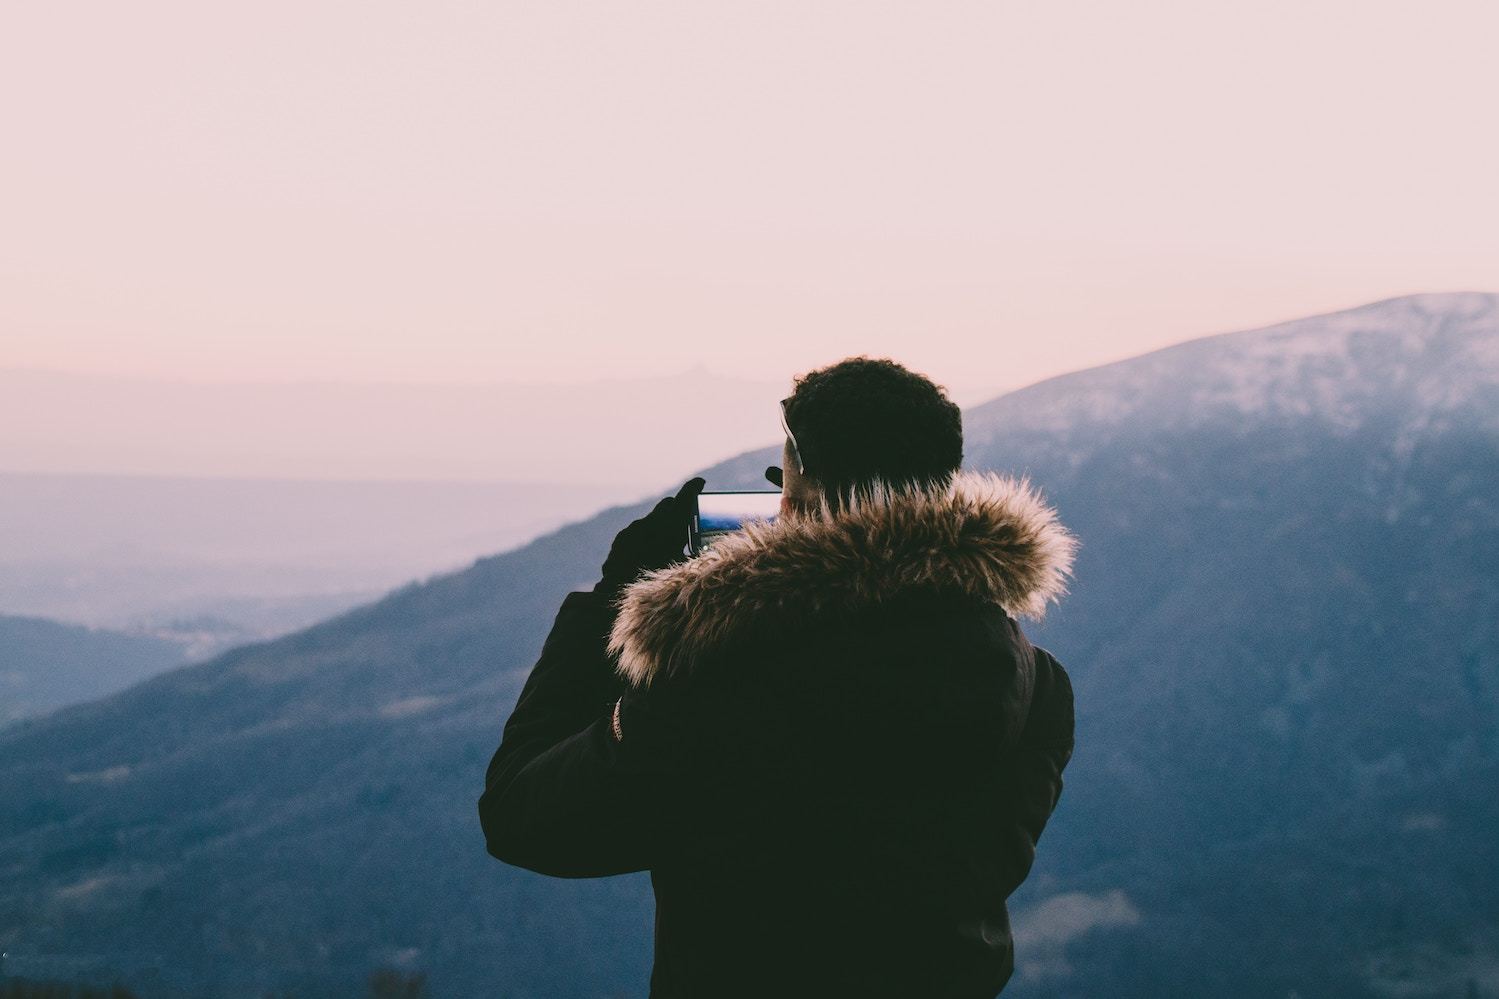 A man takes a photo from atop a mountain